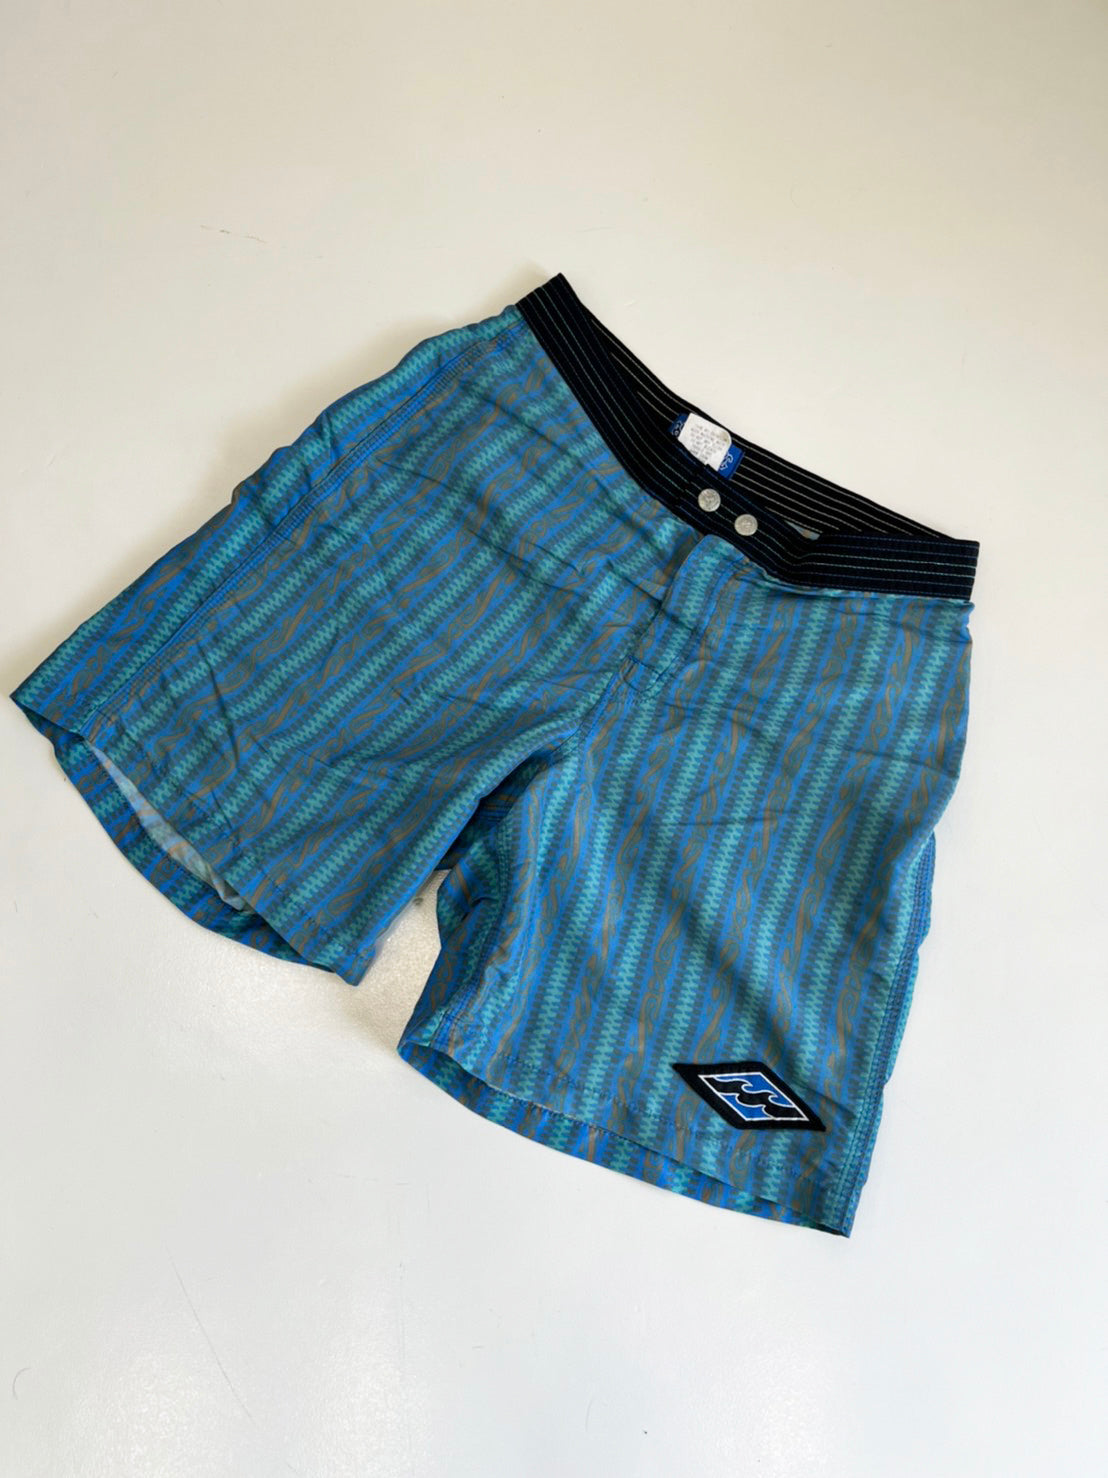 Billabong】80's vintage Billabong men's Board shorts Made in USA